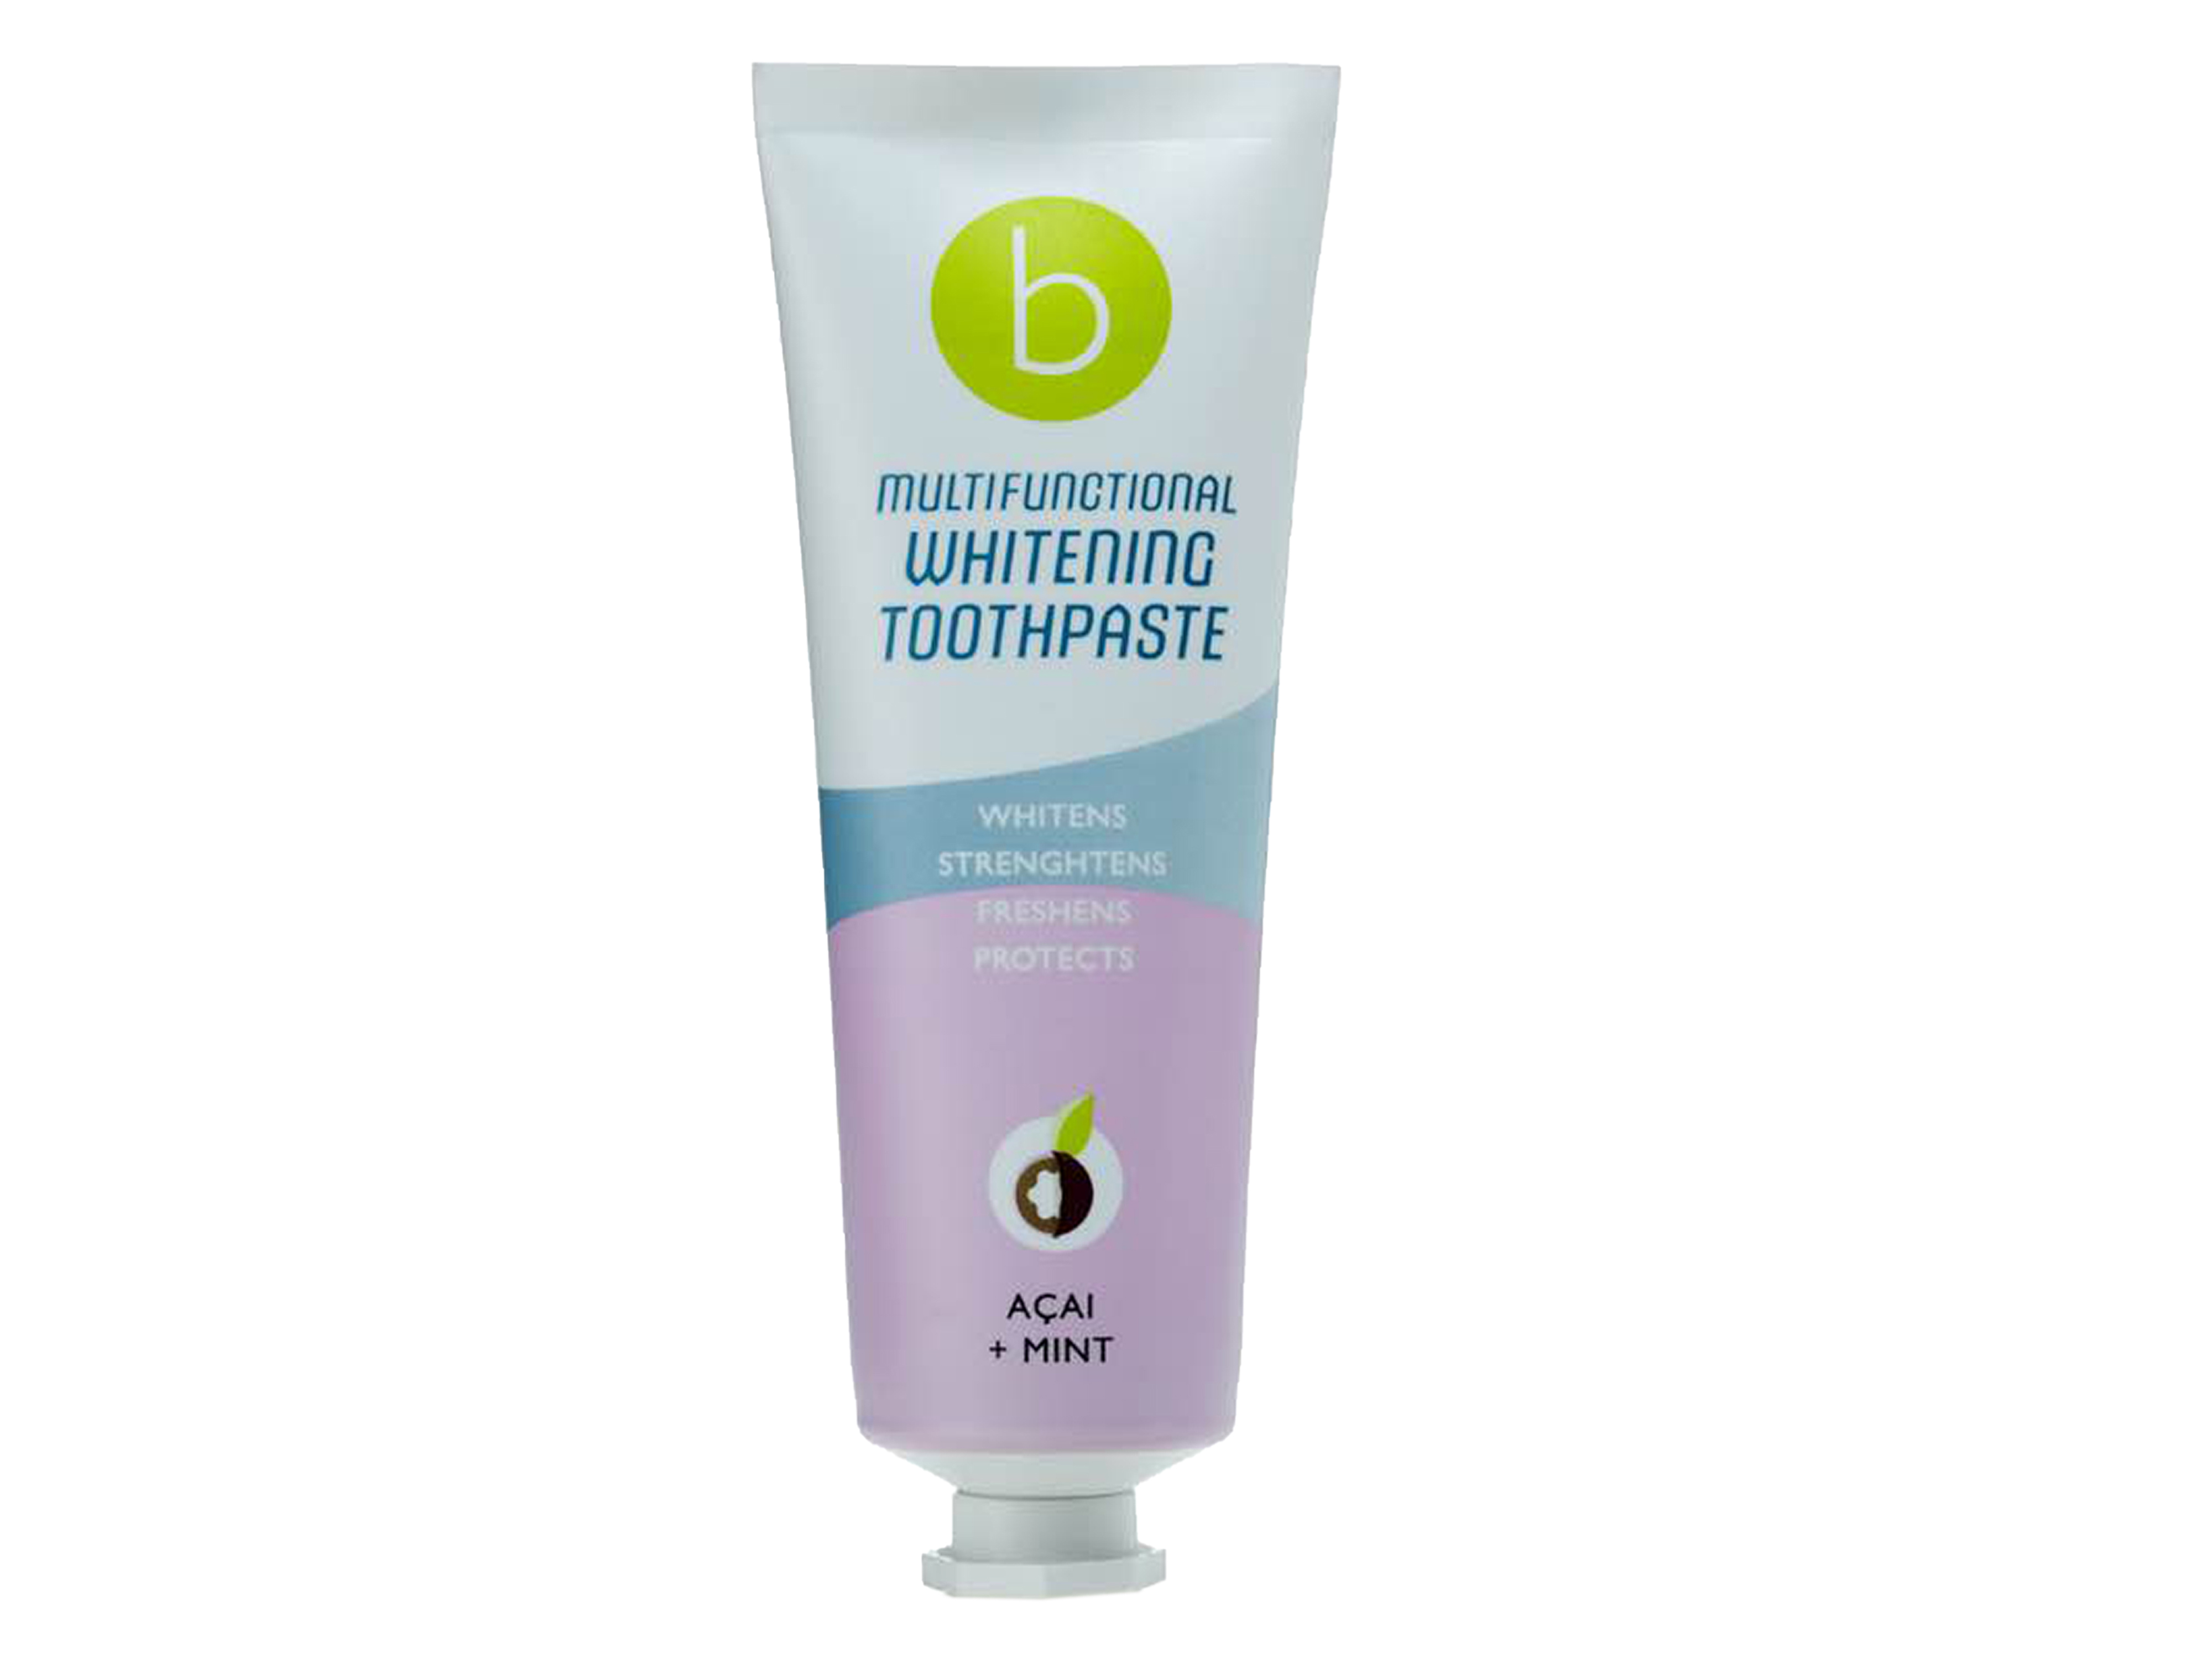 Beconfident Multifunctional Whitening Toothpaste, acai + mint, 75 ml